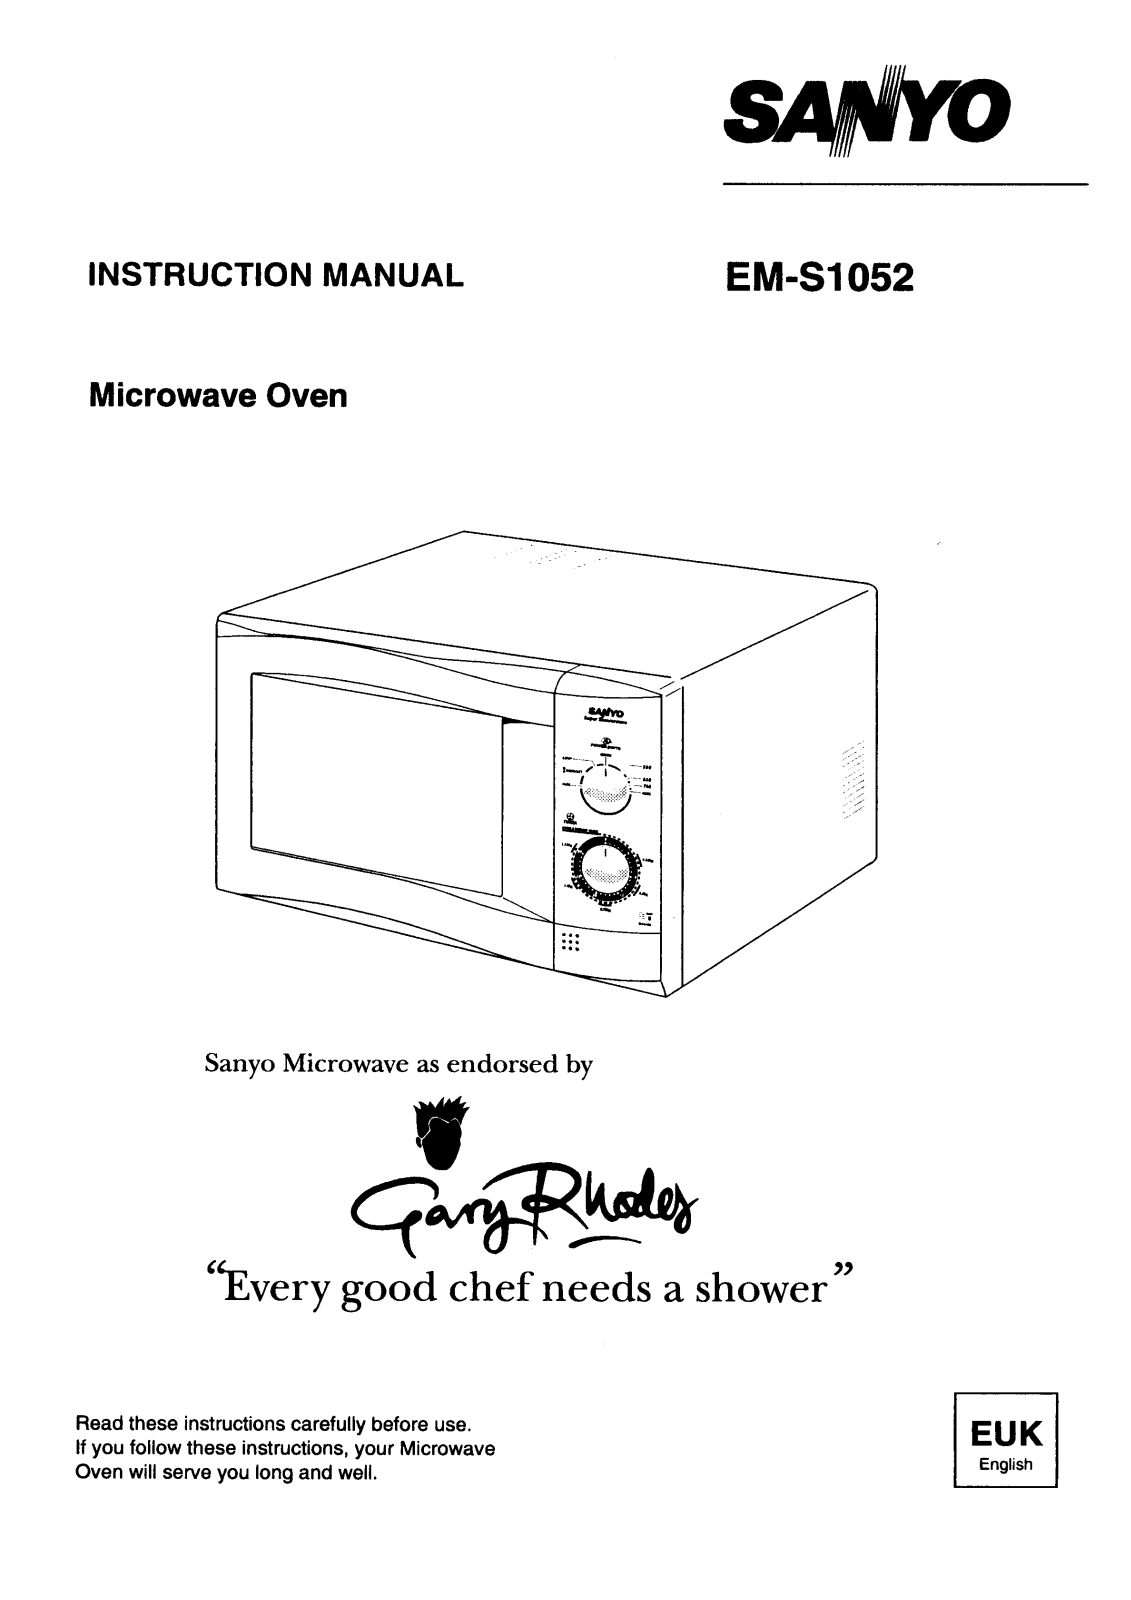 Sanyo EM-S1052 Instruction Manual